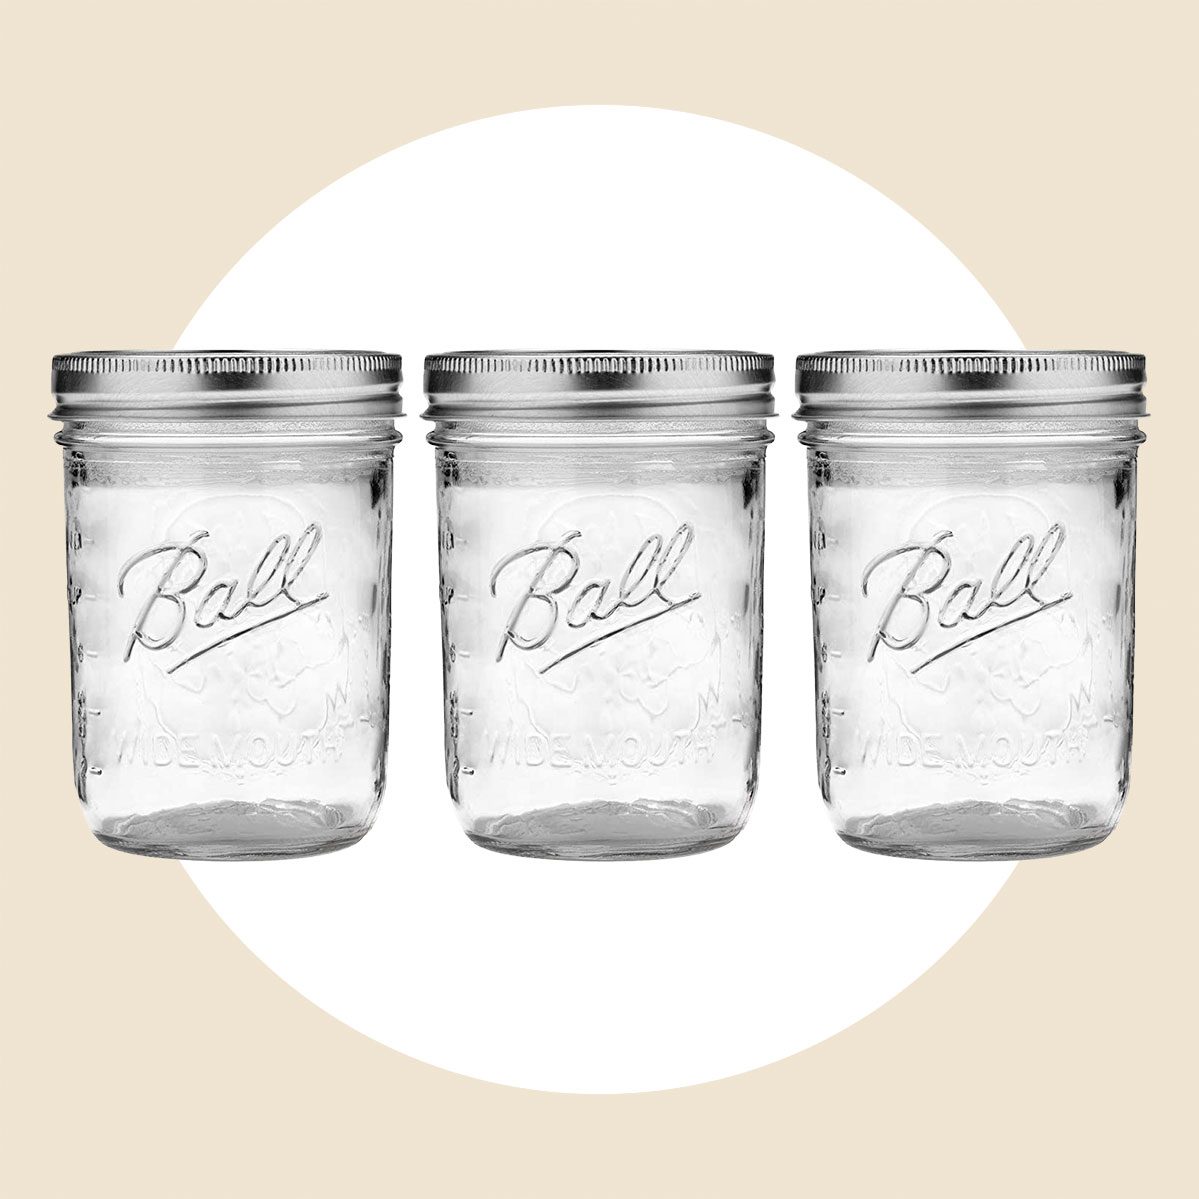 NeatMethod Glass Spice Jars with Brass Lids, Set of 10 + Reviews